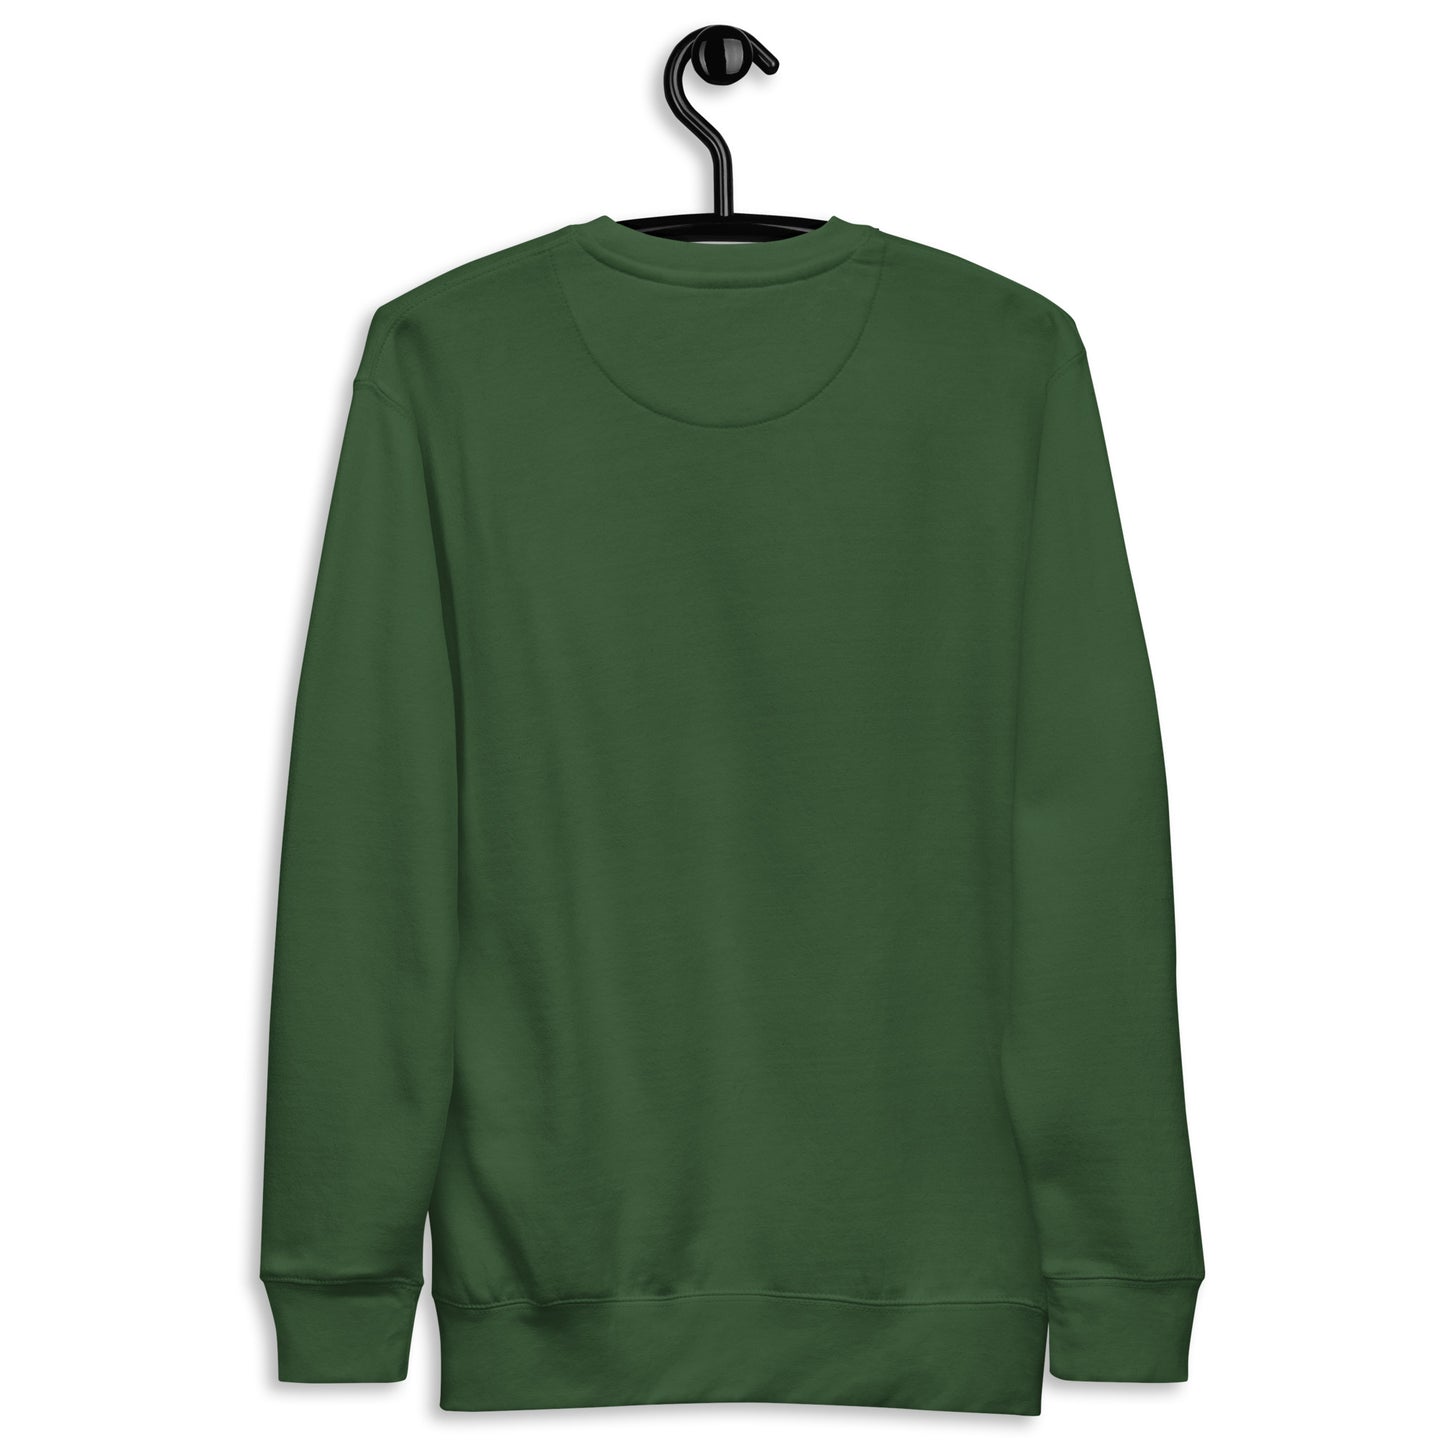 Unisex Premium Sweatshirt Embroidery